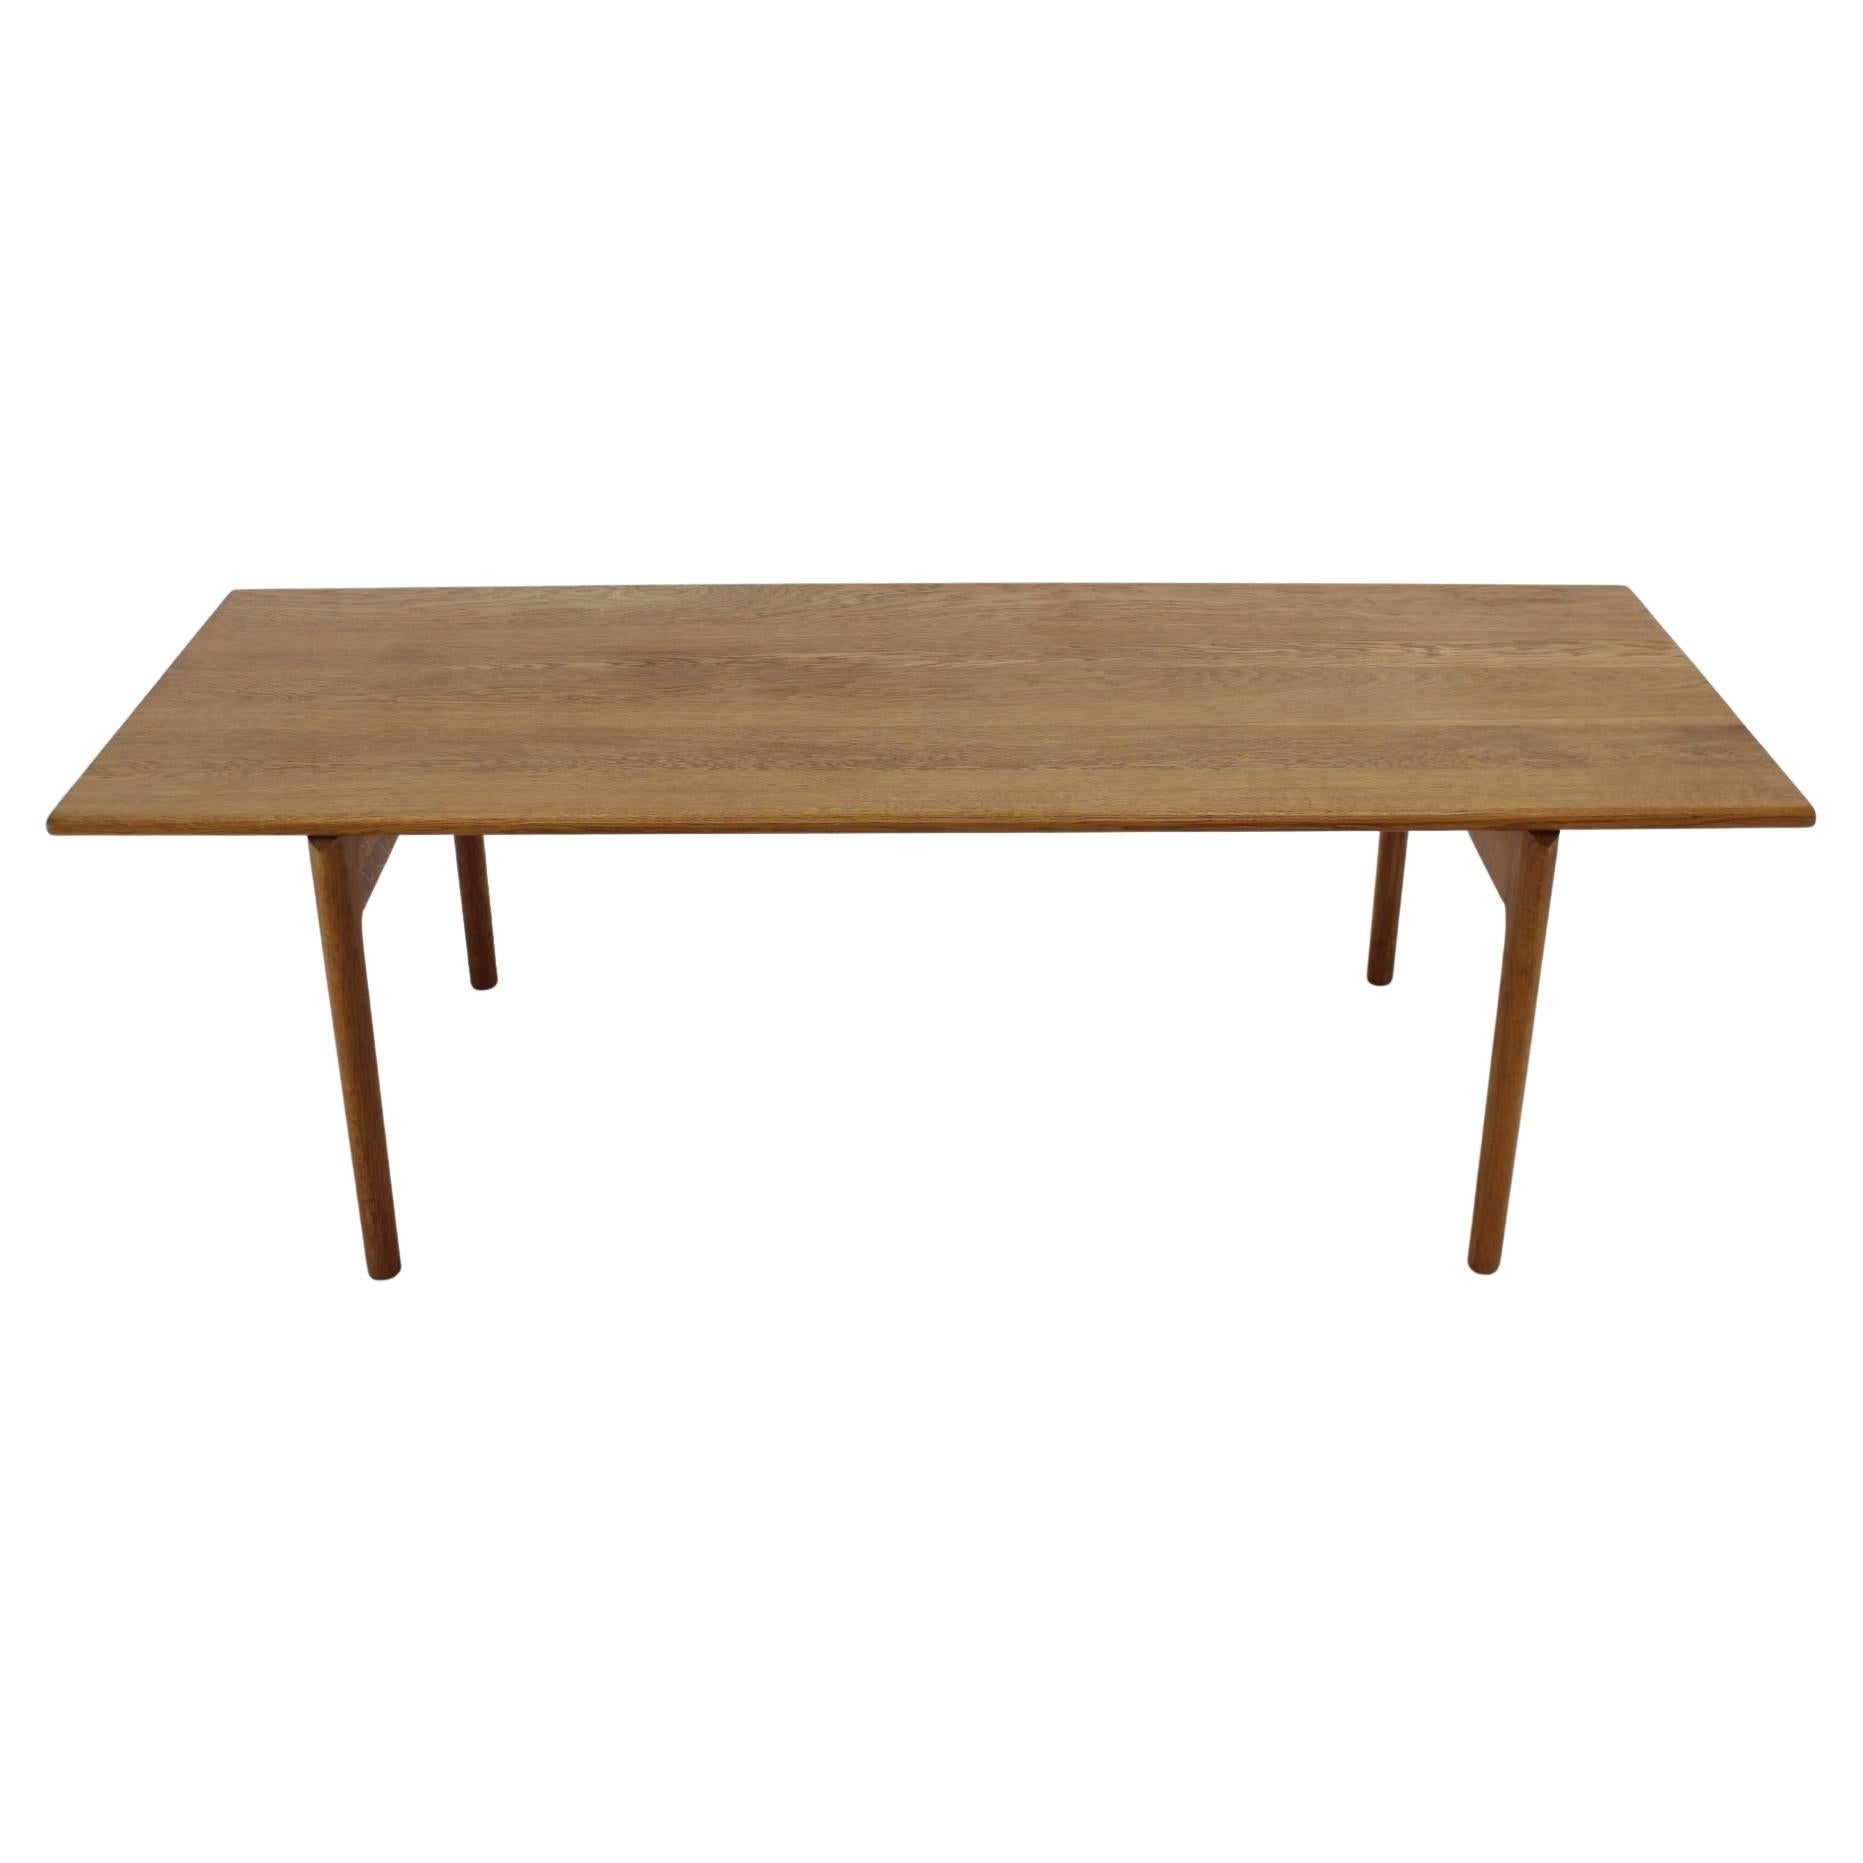 1960s Hans J Wegner Solid Oak Coffee Table 'AT-15' for Andreas Tuck, Denmark  For Sale